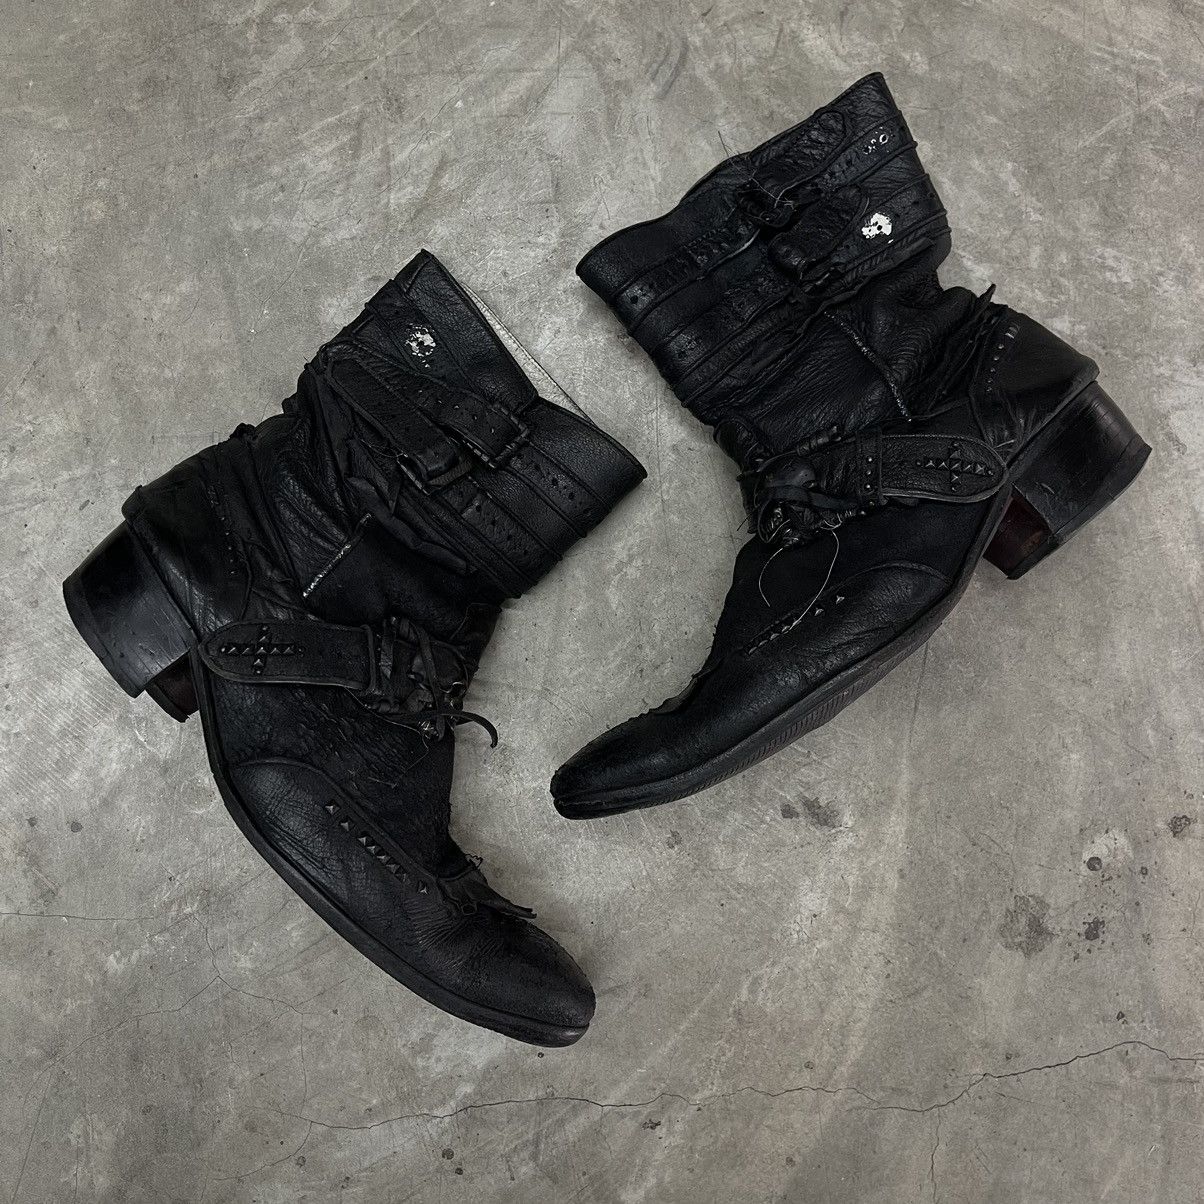 Japanese Brand Roen x Hiromu Takahara Leather Boots | Grailed